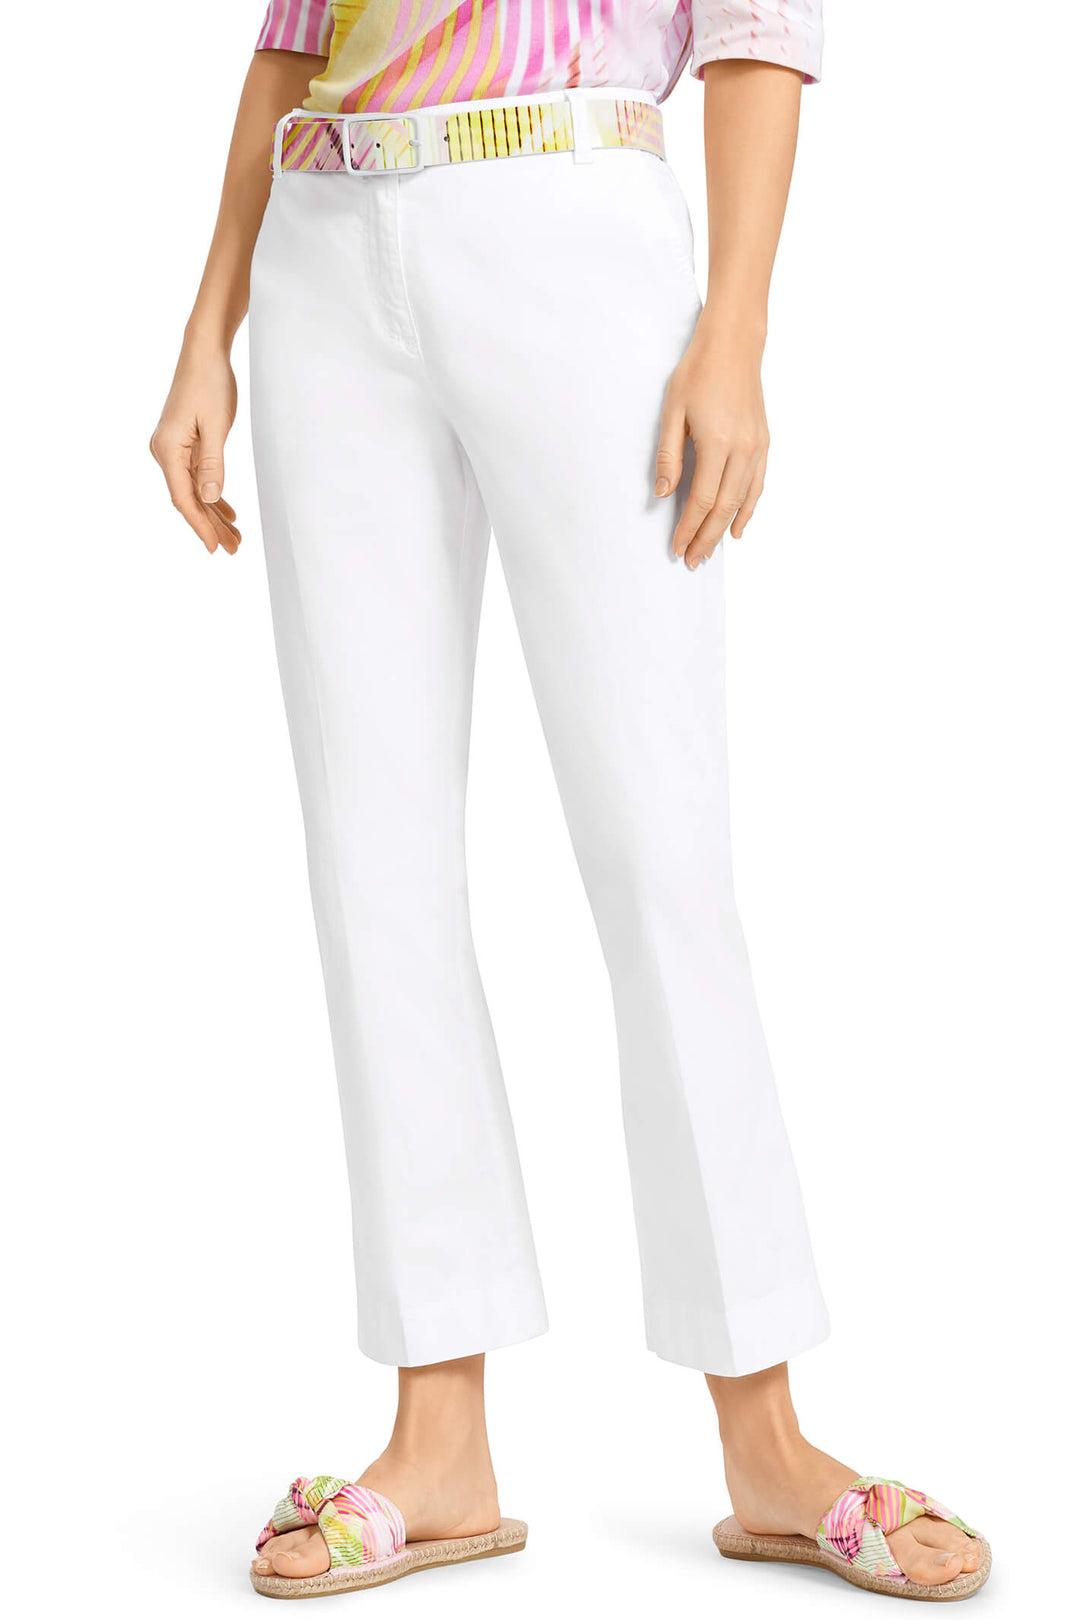 Marc Cain Sports US 81.43 W62 100 White Trousers - Olivia Grace Fashion